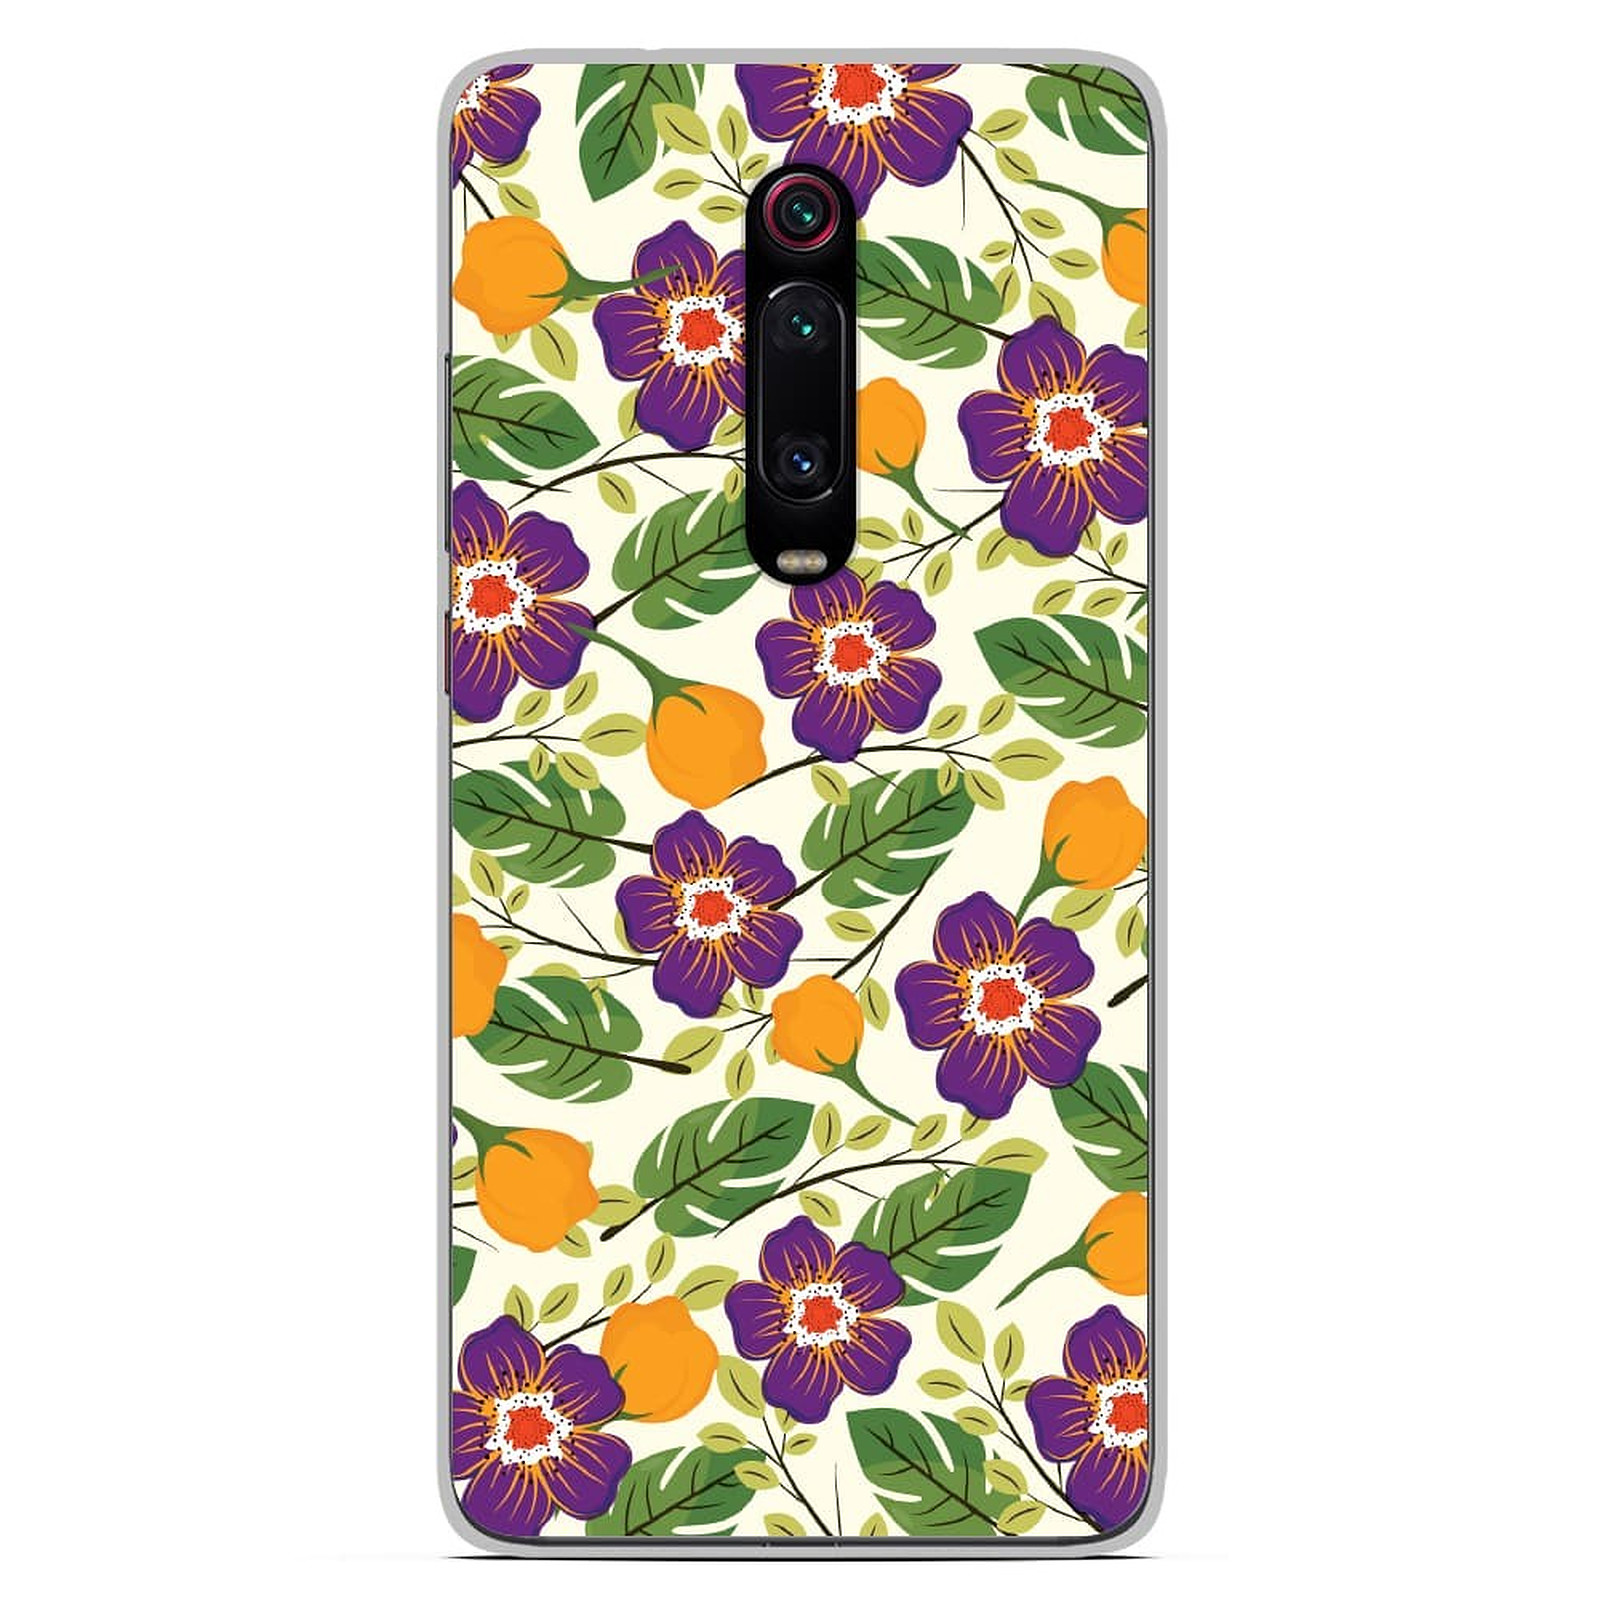 1001 Coques Coque silicone gel Xiaomi Mi 9T motif Fleurs Violettes - Coque telephone 1001Coques